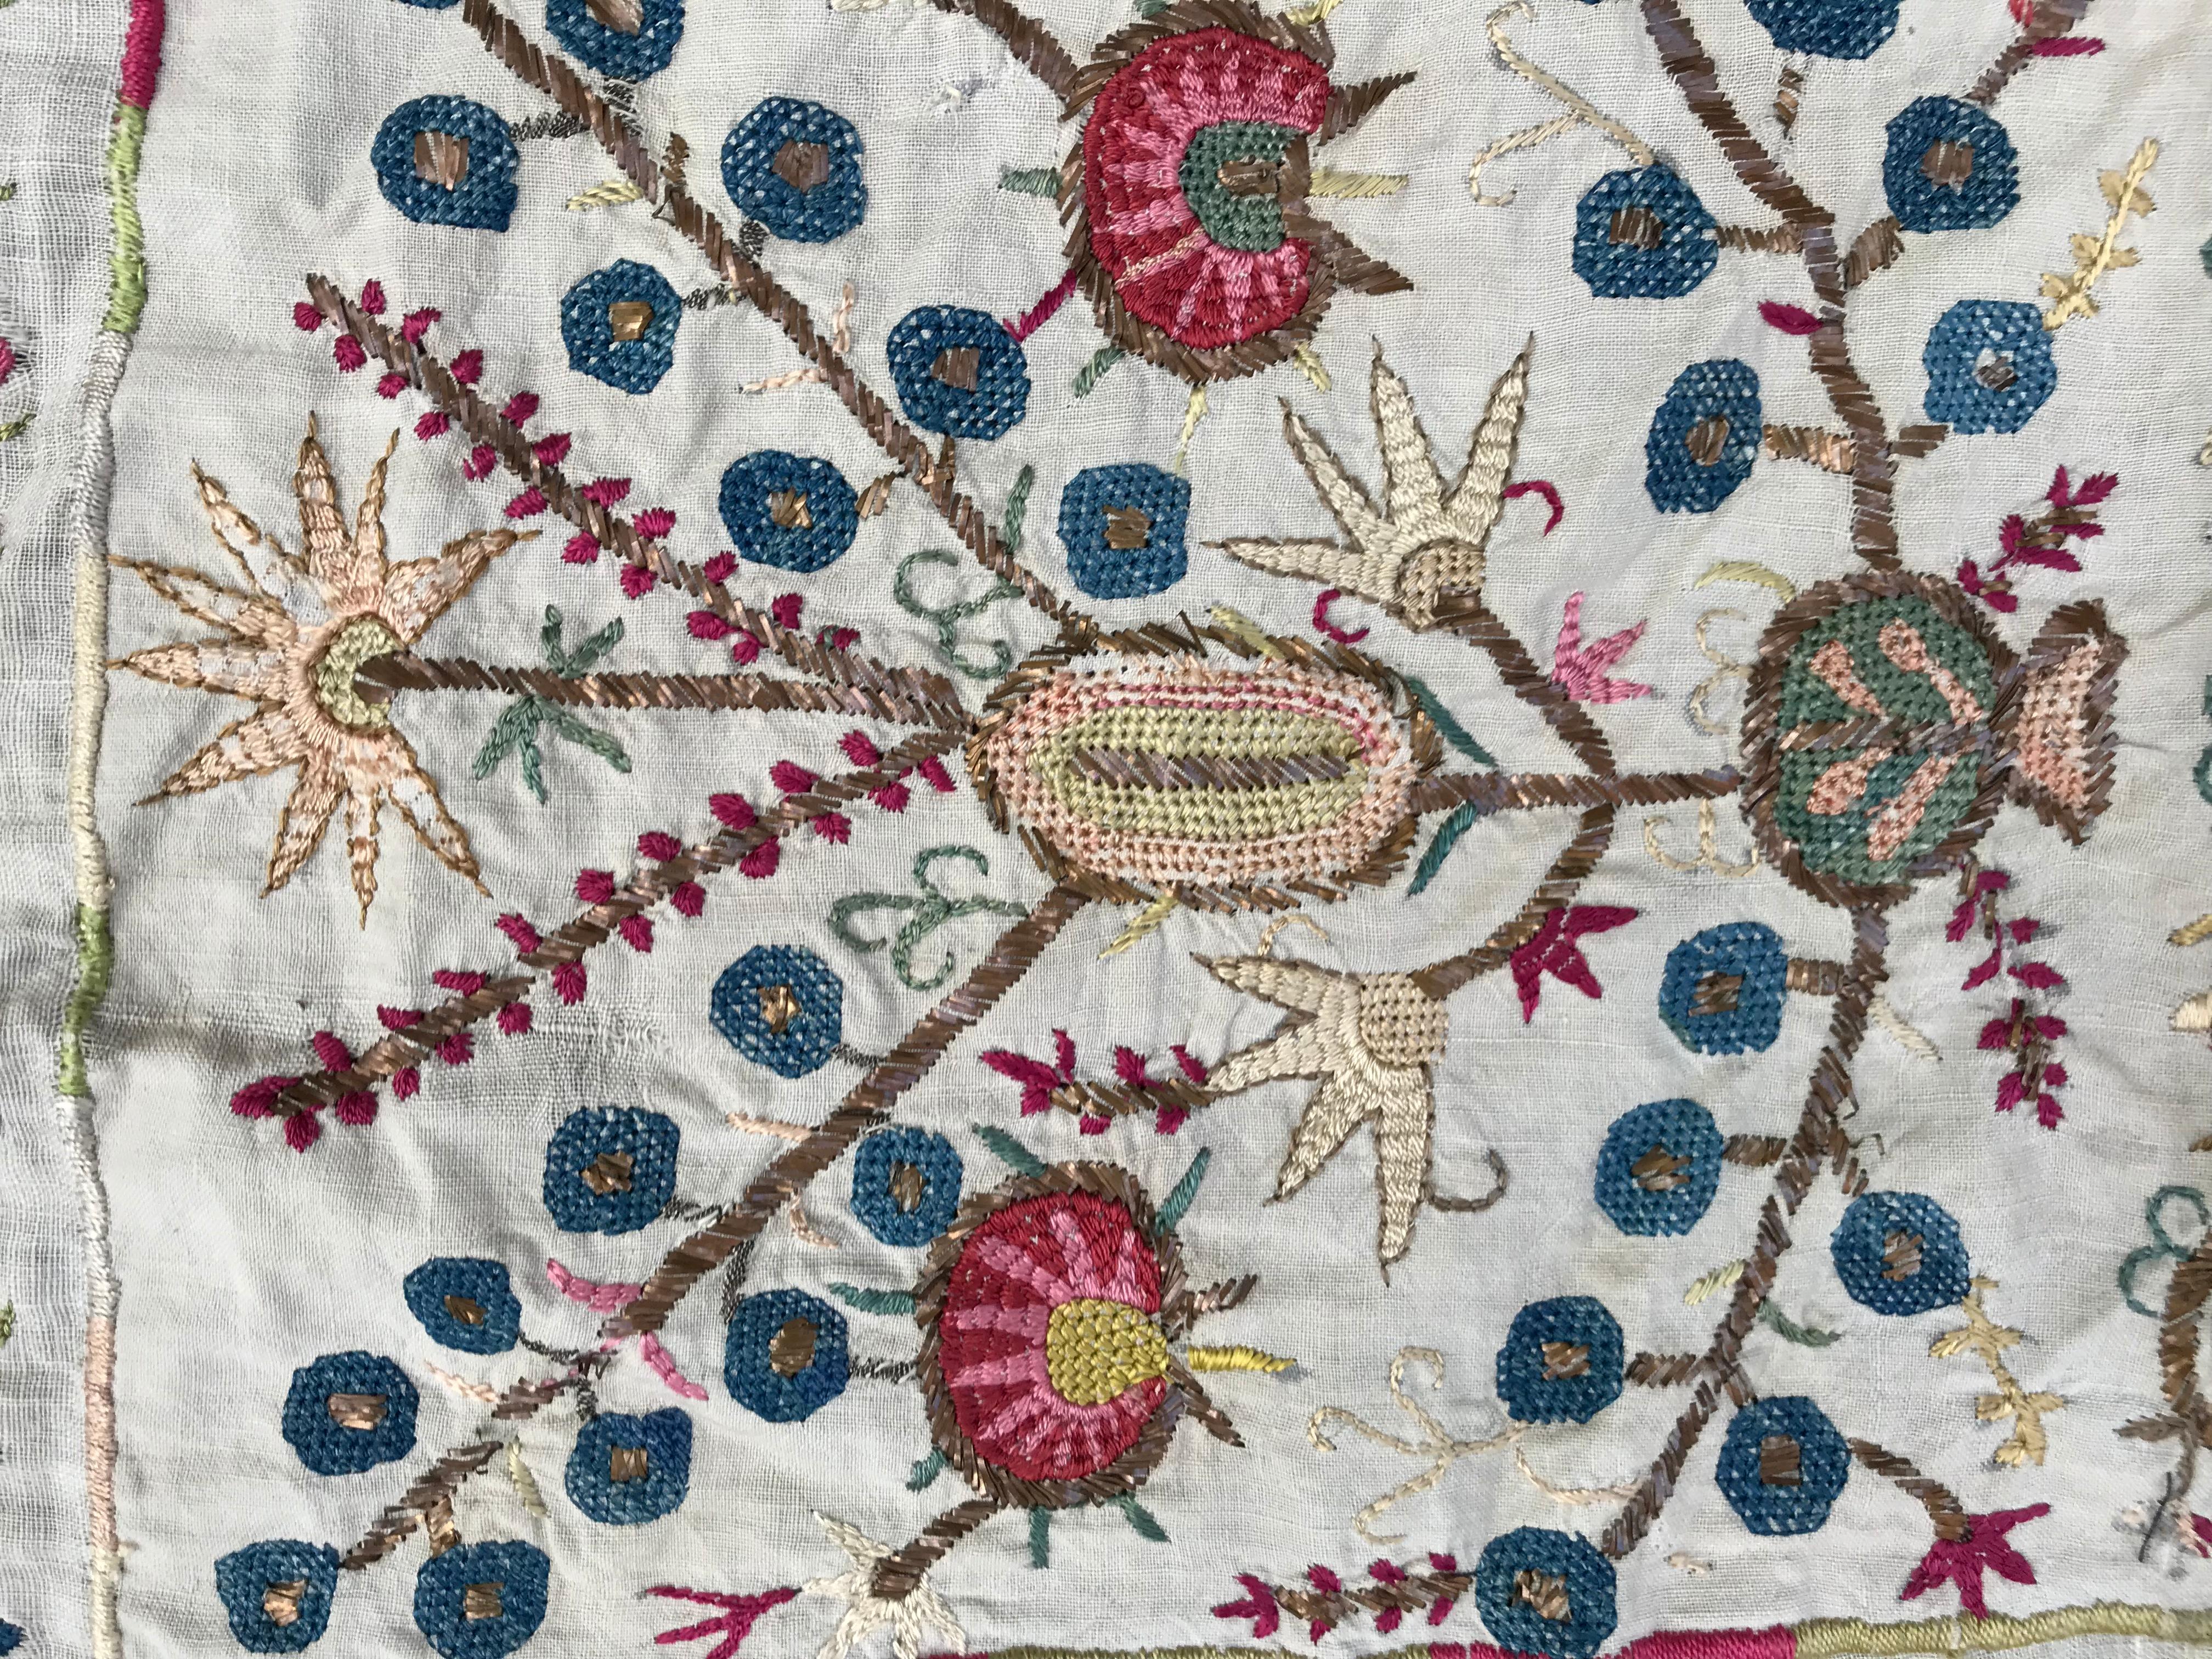 Islamic Antique Turkish Ottoman Embroidery